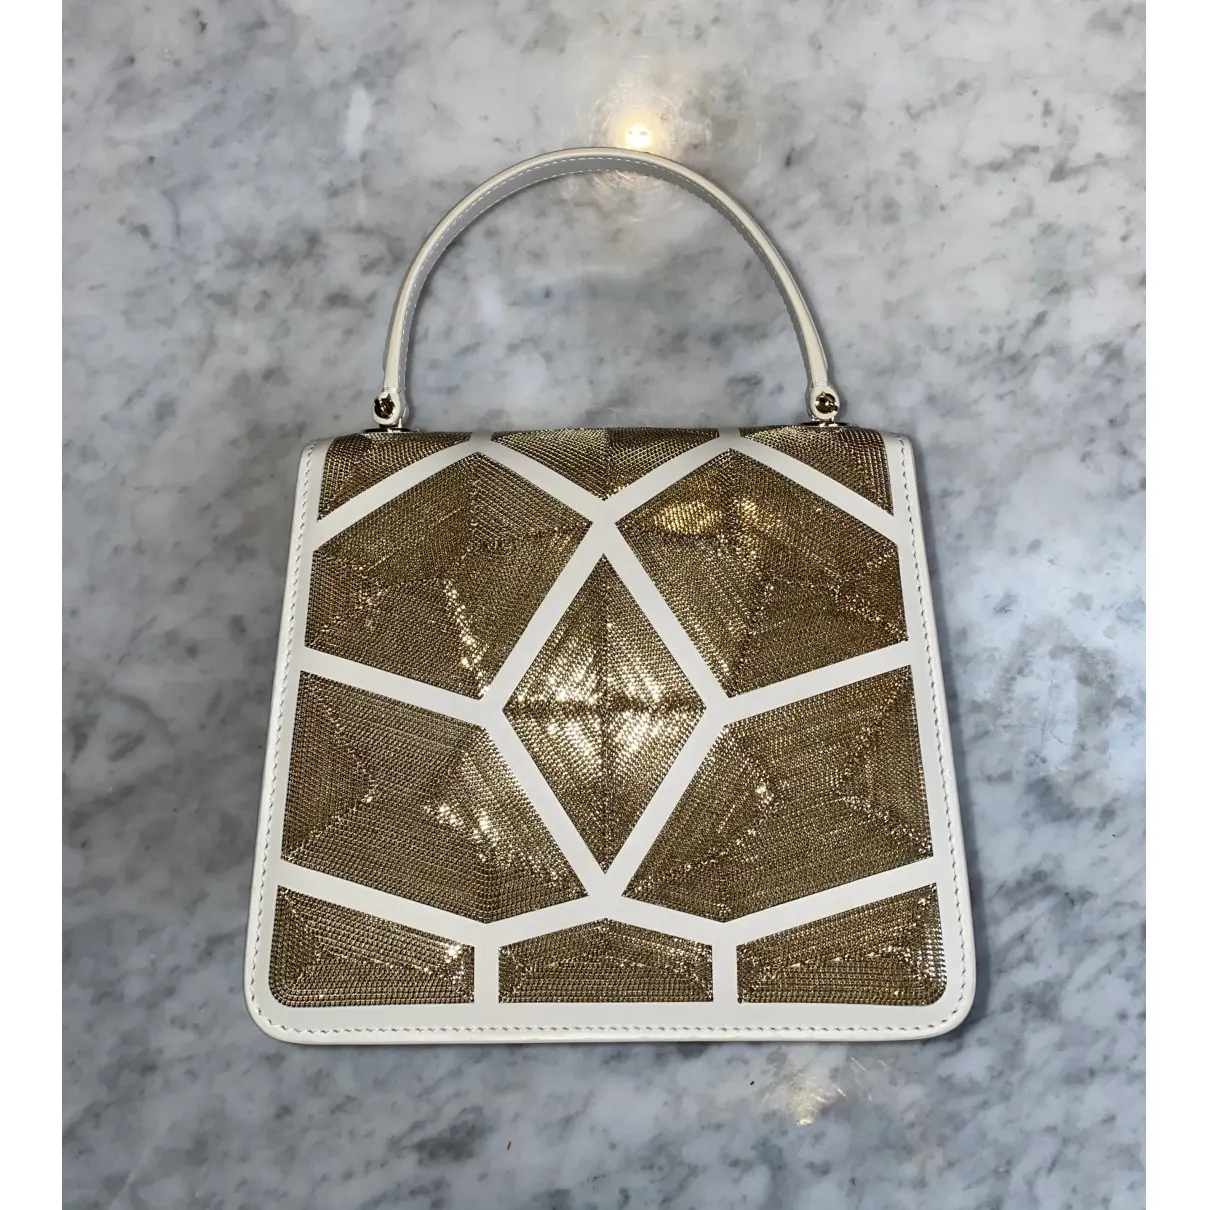 Buy Bvlgari Serpenti leather handbag online